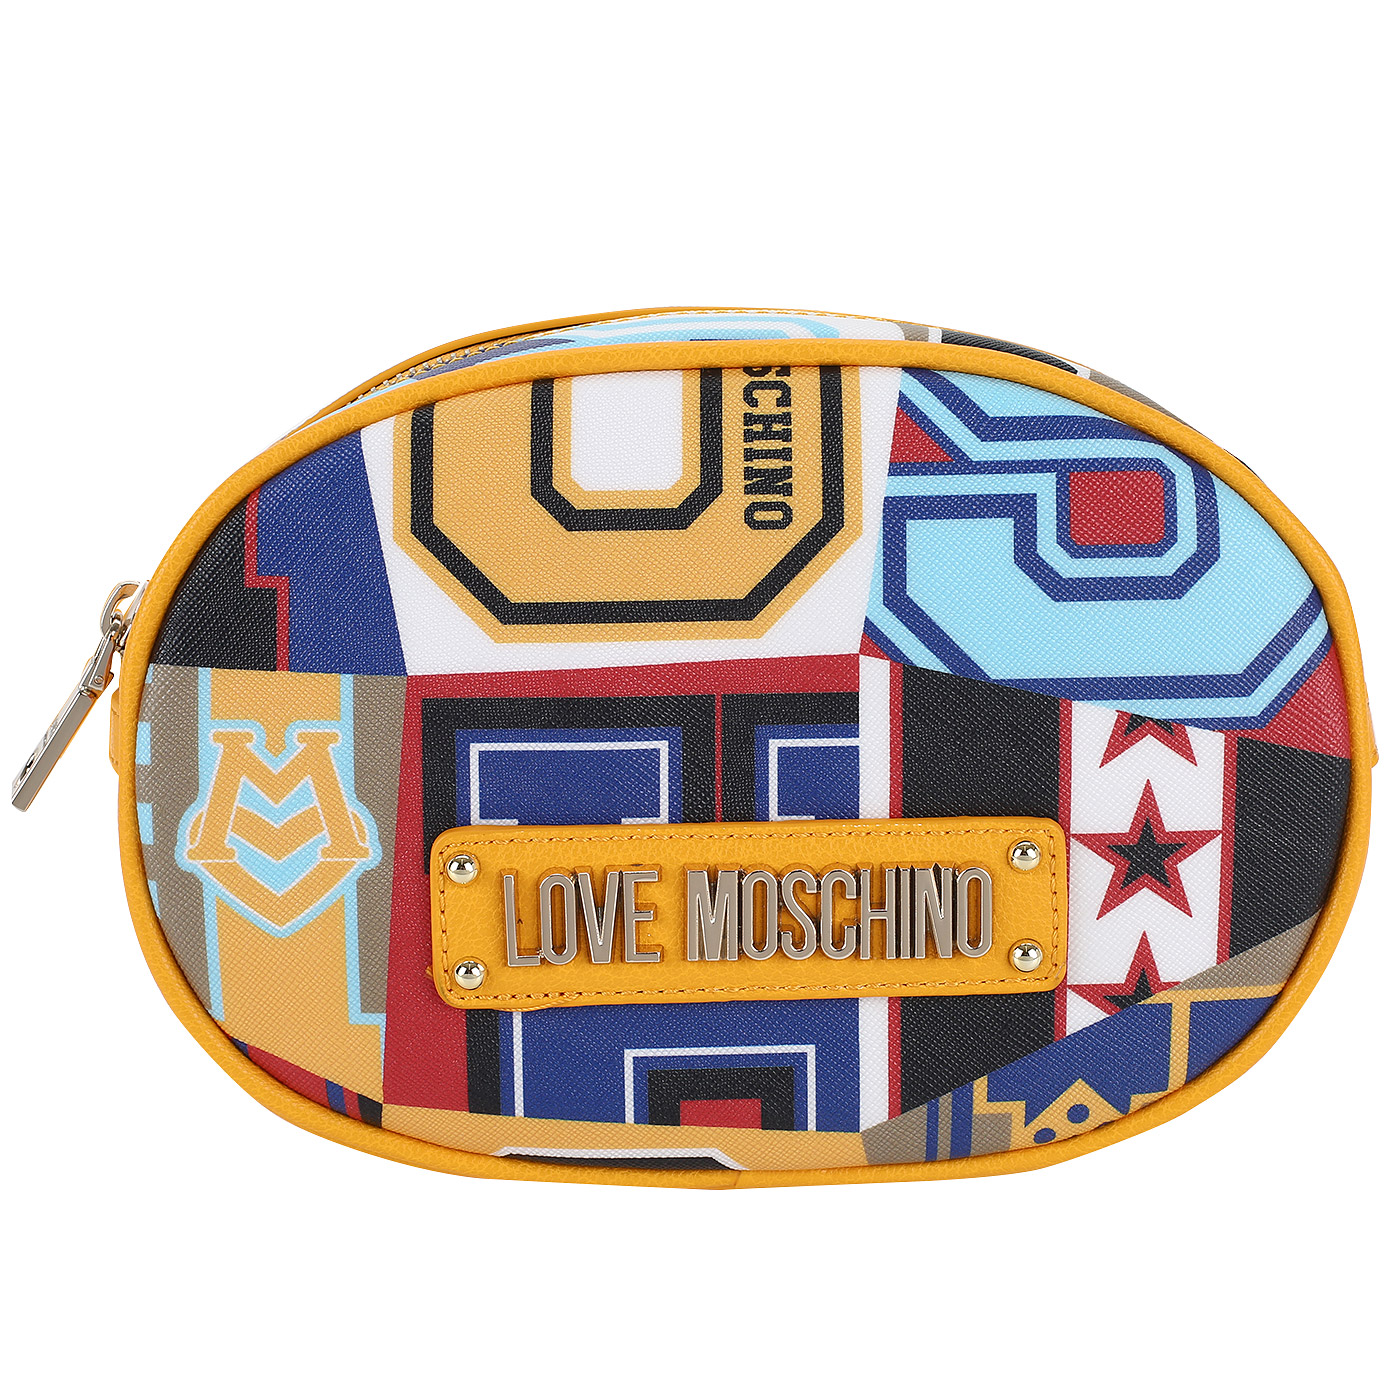 Love Moschino Овальная сумочка на пояс